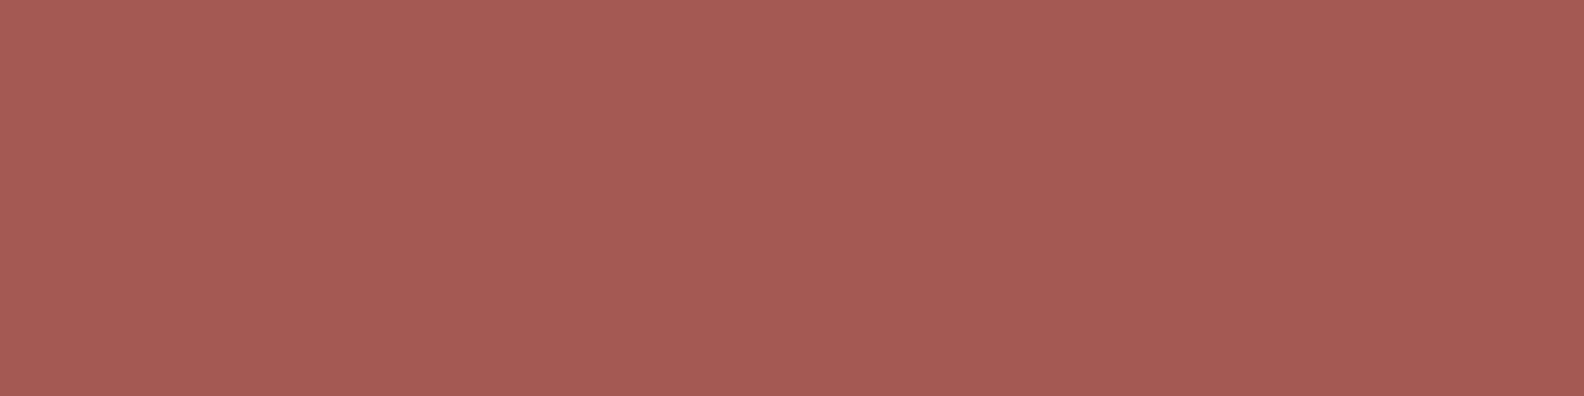 1584x396 Redwood Solid Color Background